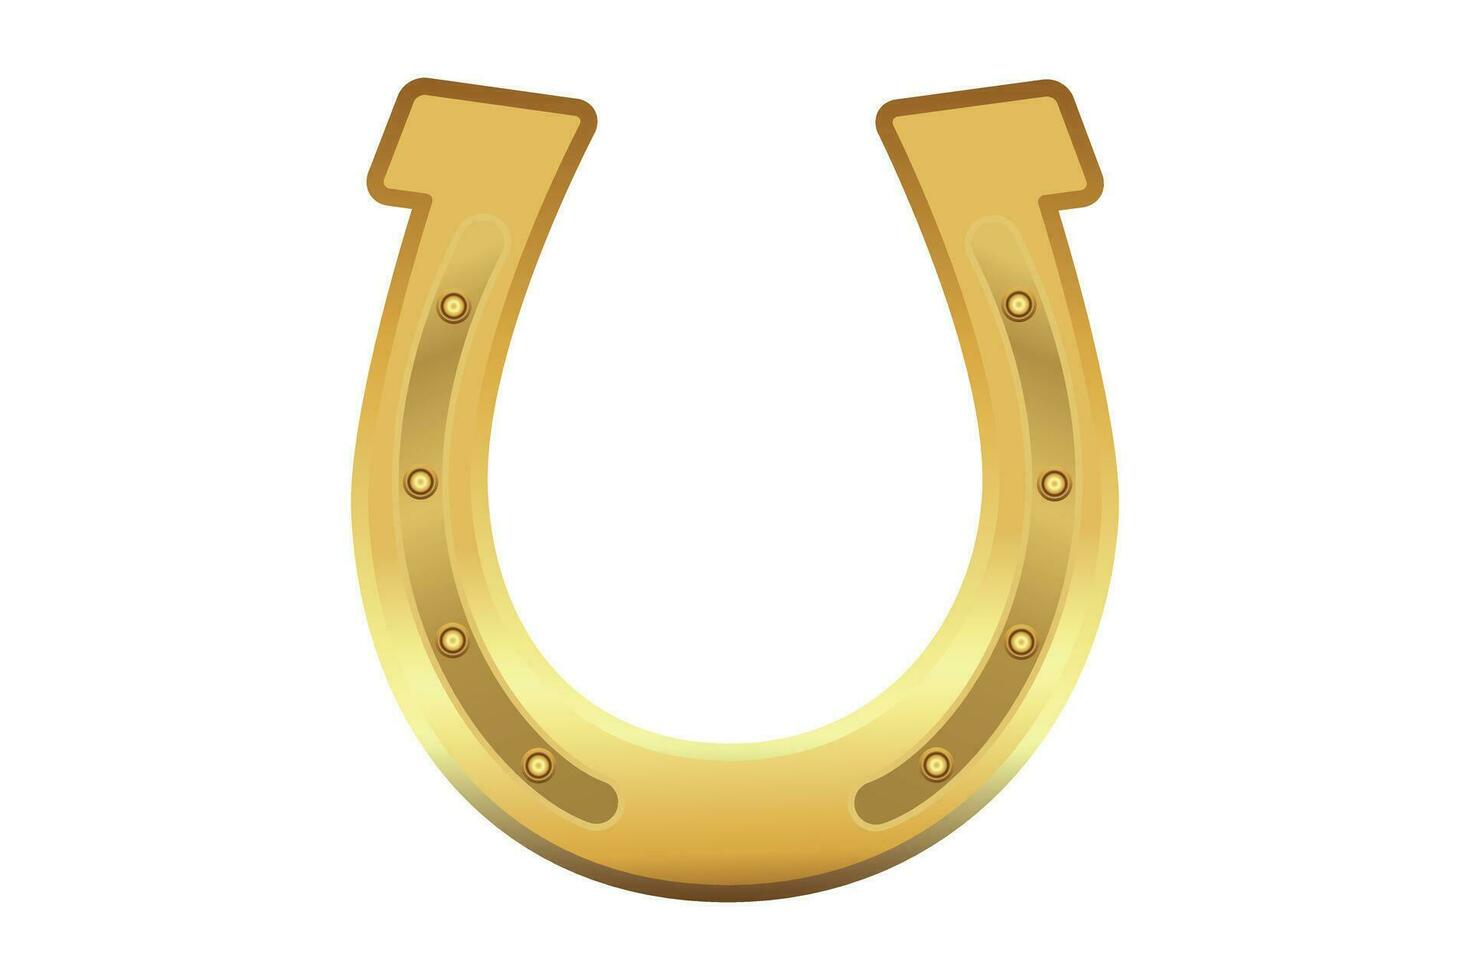 Golden horseshoe for good luck. Vector design. Good luck symbol isolated on white background.